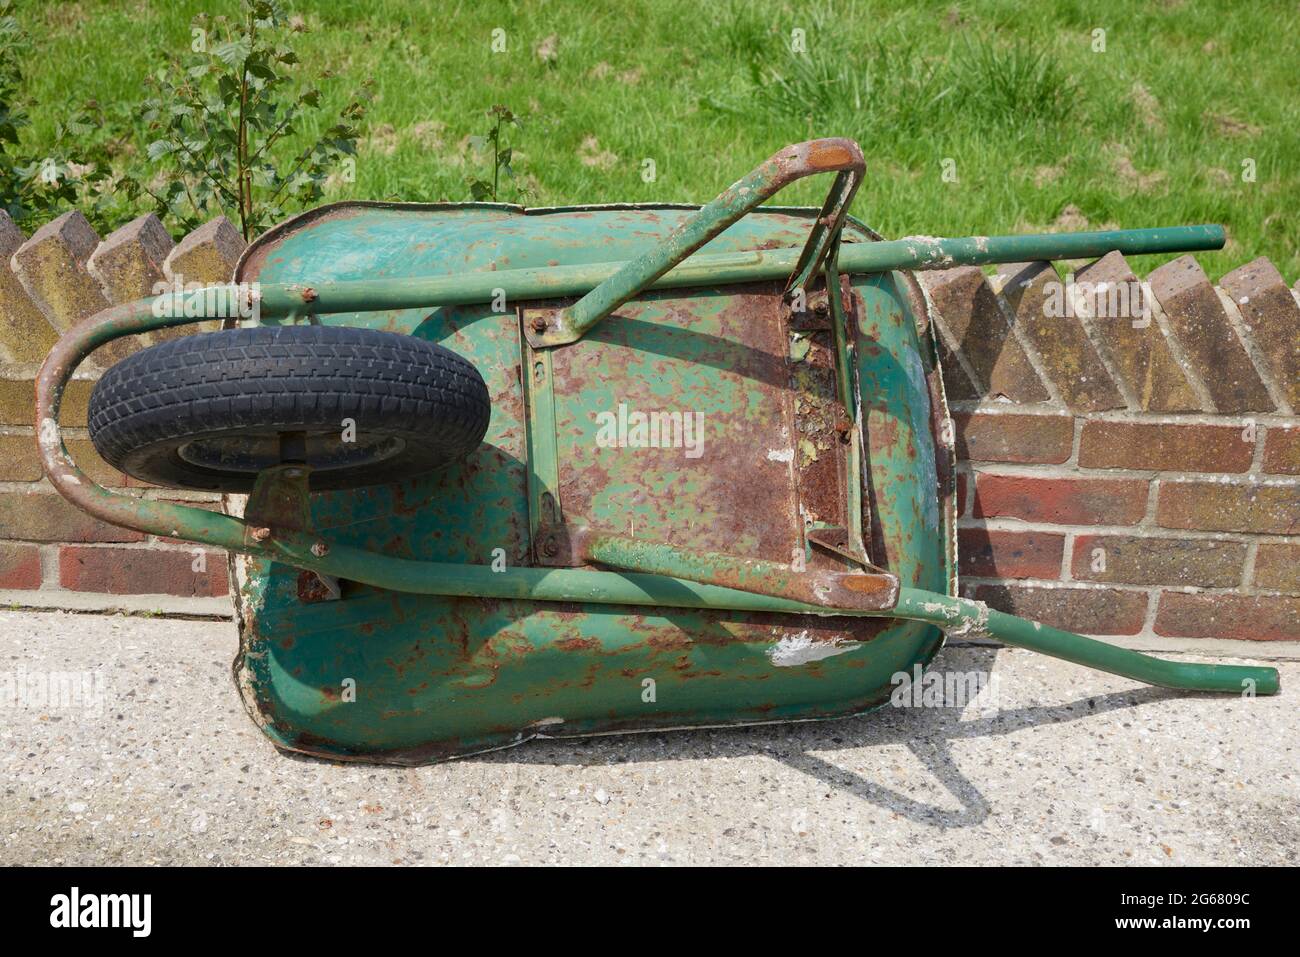 Used wheelbarrow seen discarded against a wall. Stock Photo